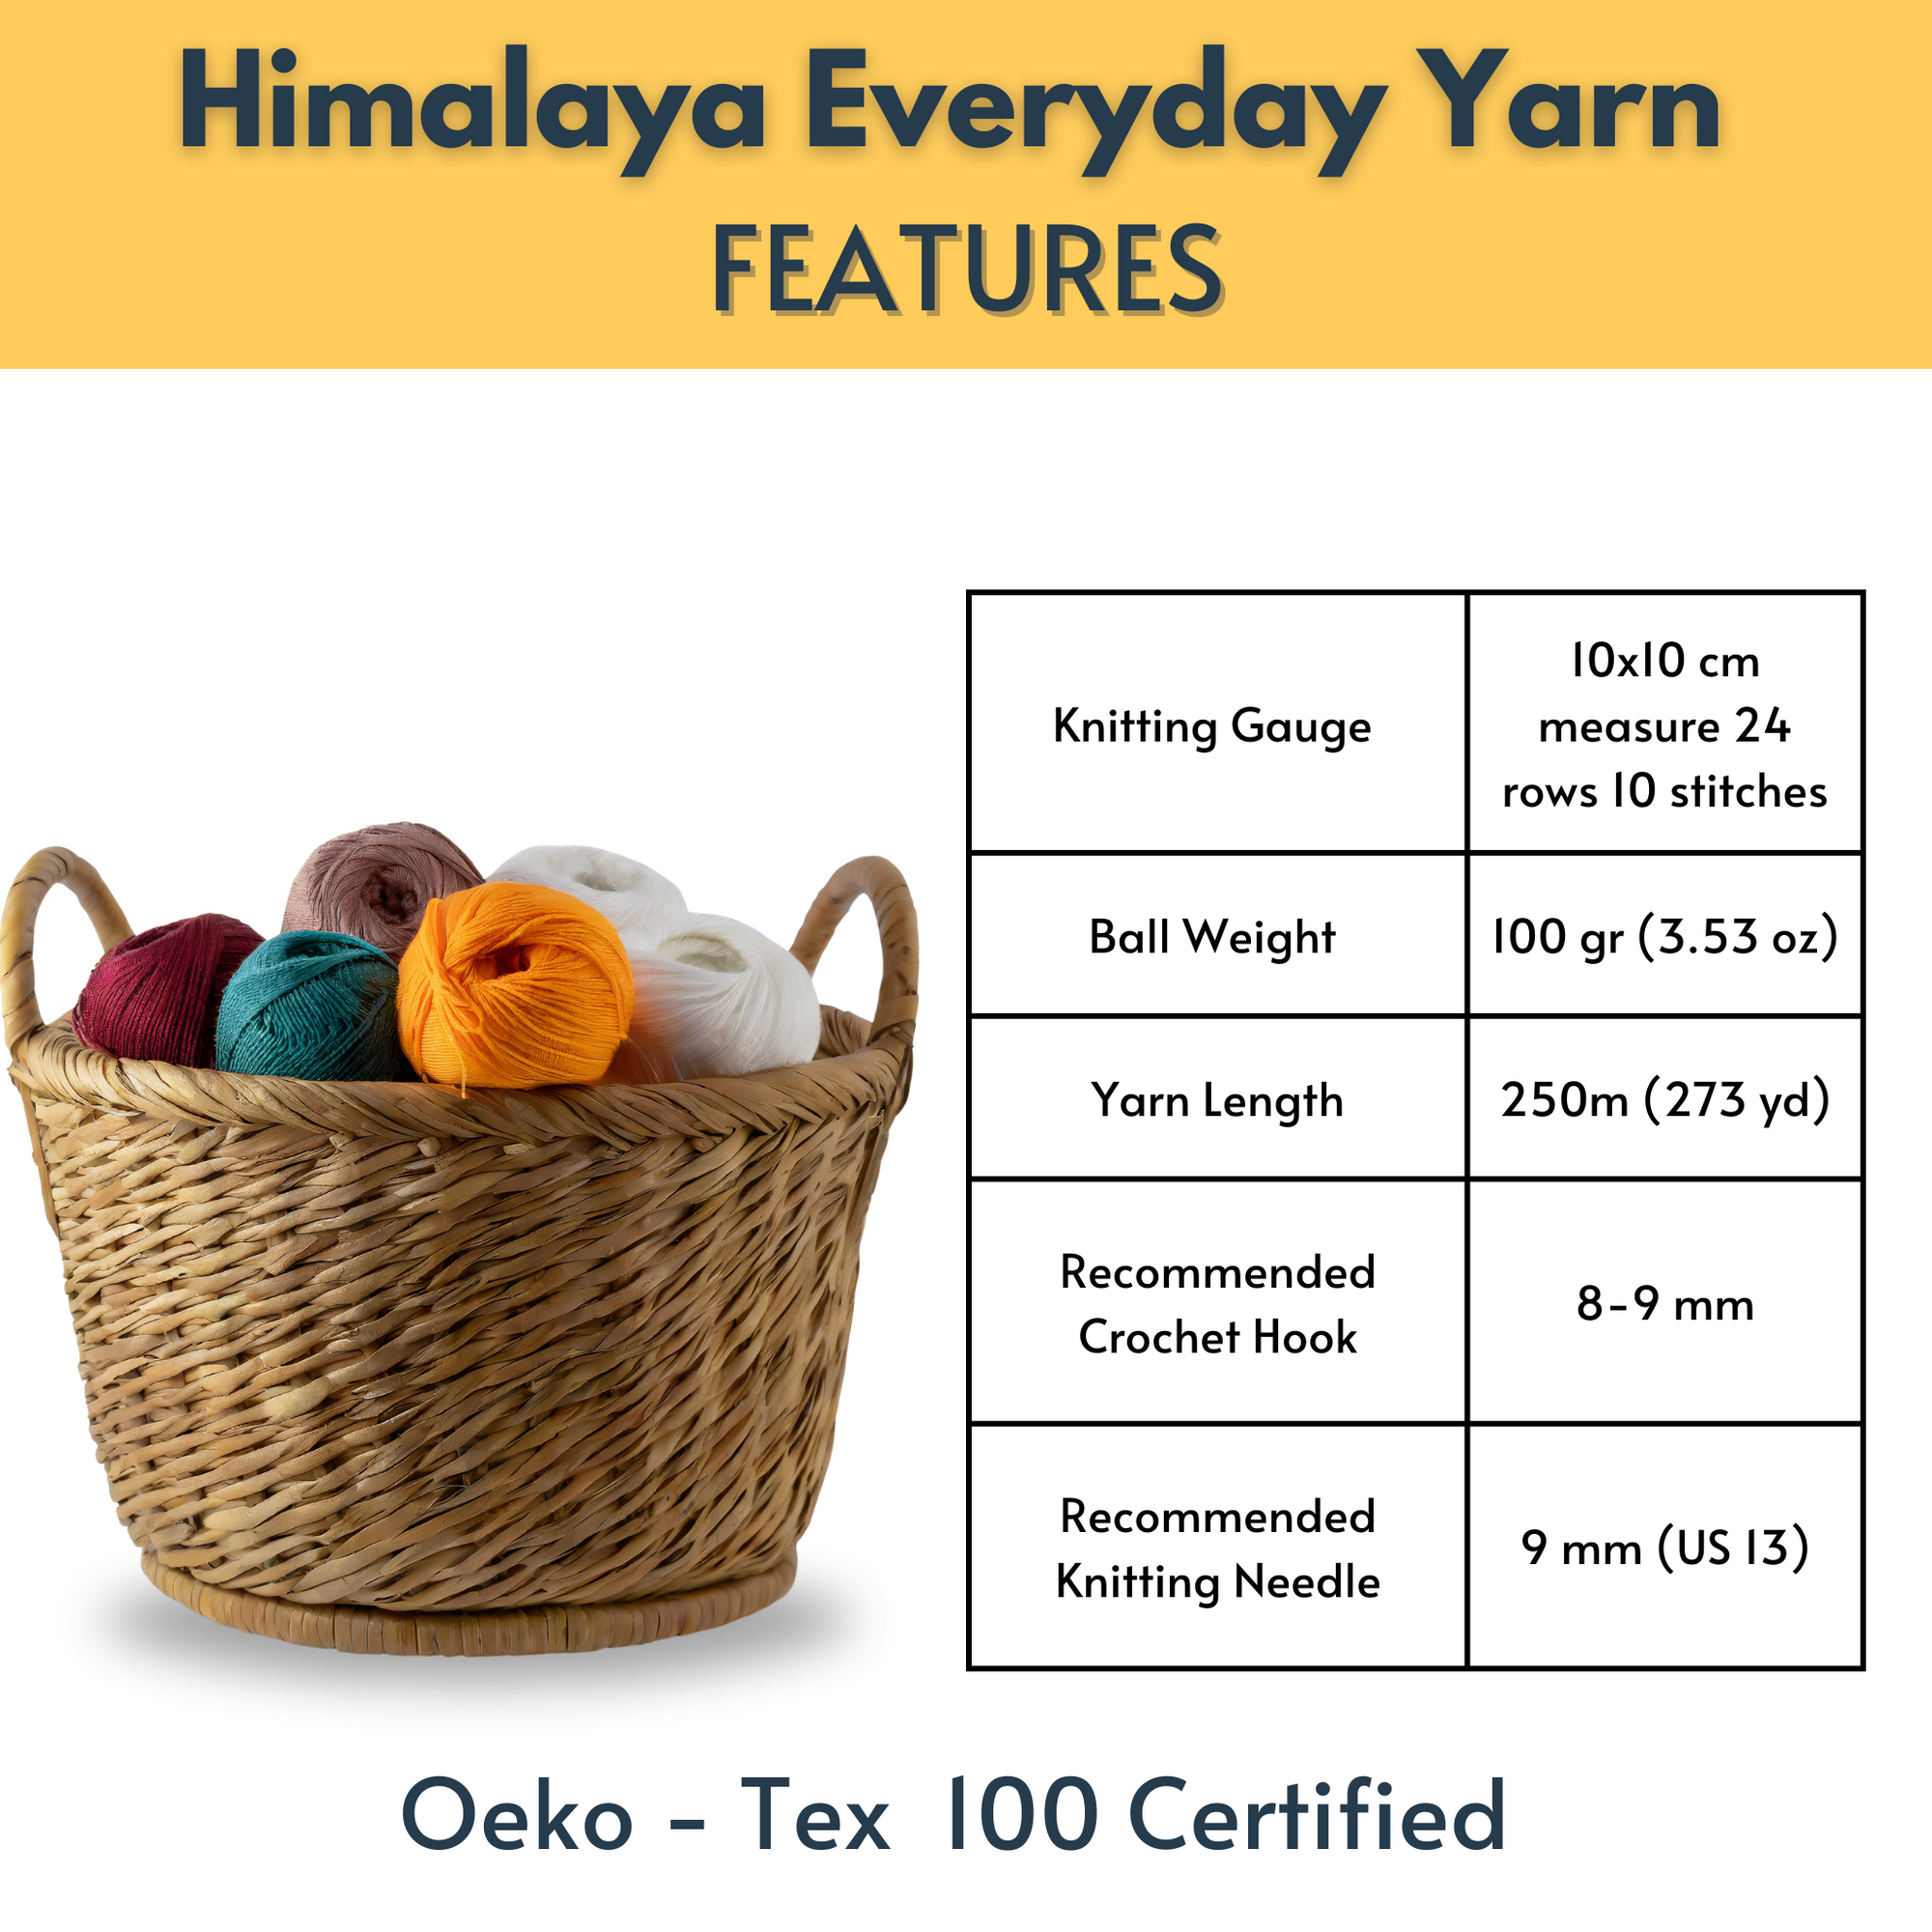 Himalaya Everyday 100% Anti-Pilling Acrylic Yarn, Black - 70824